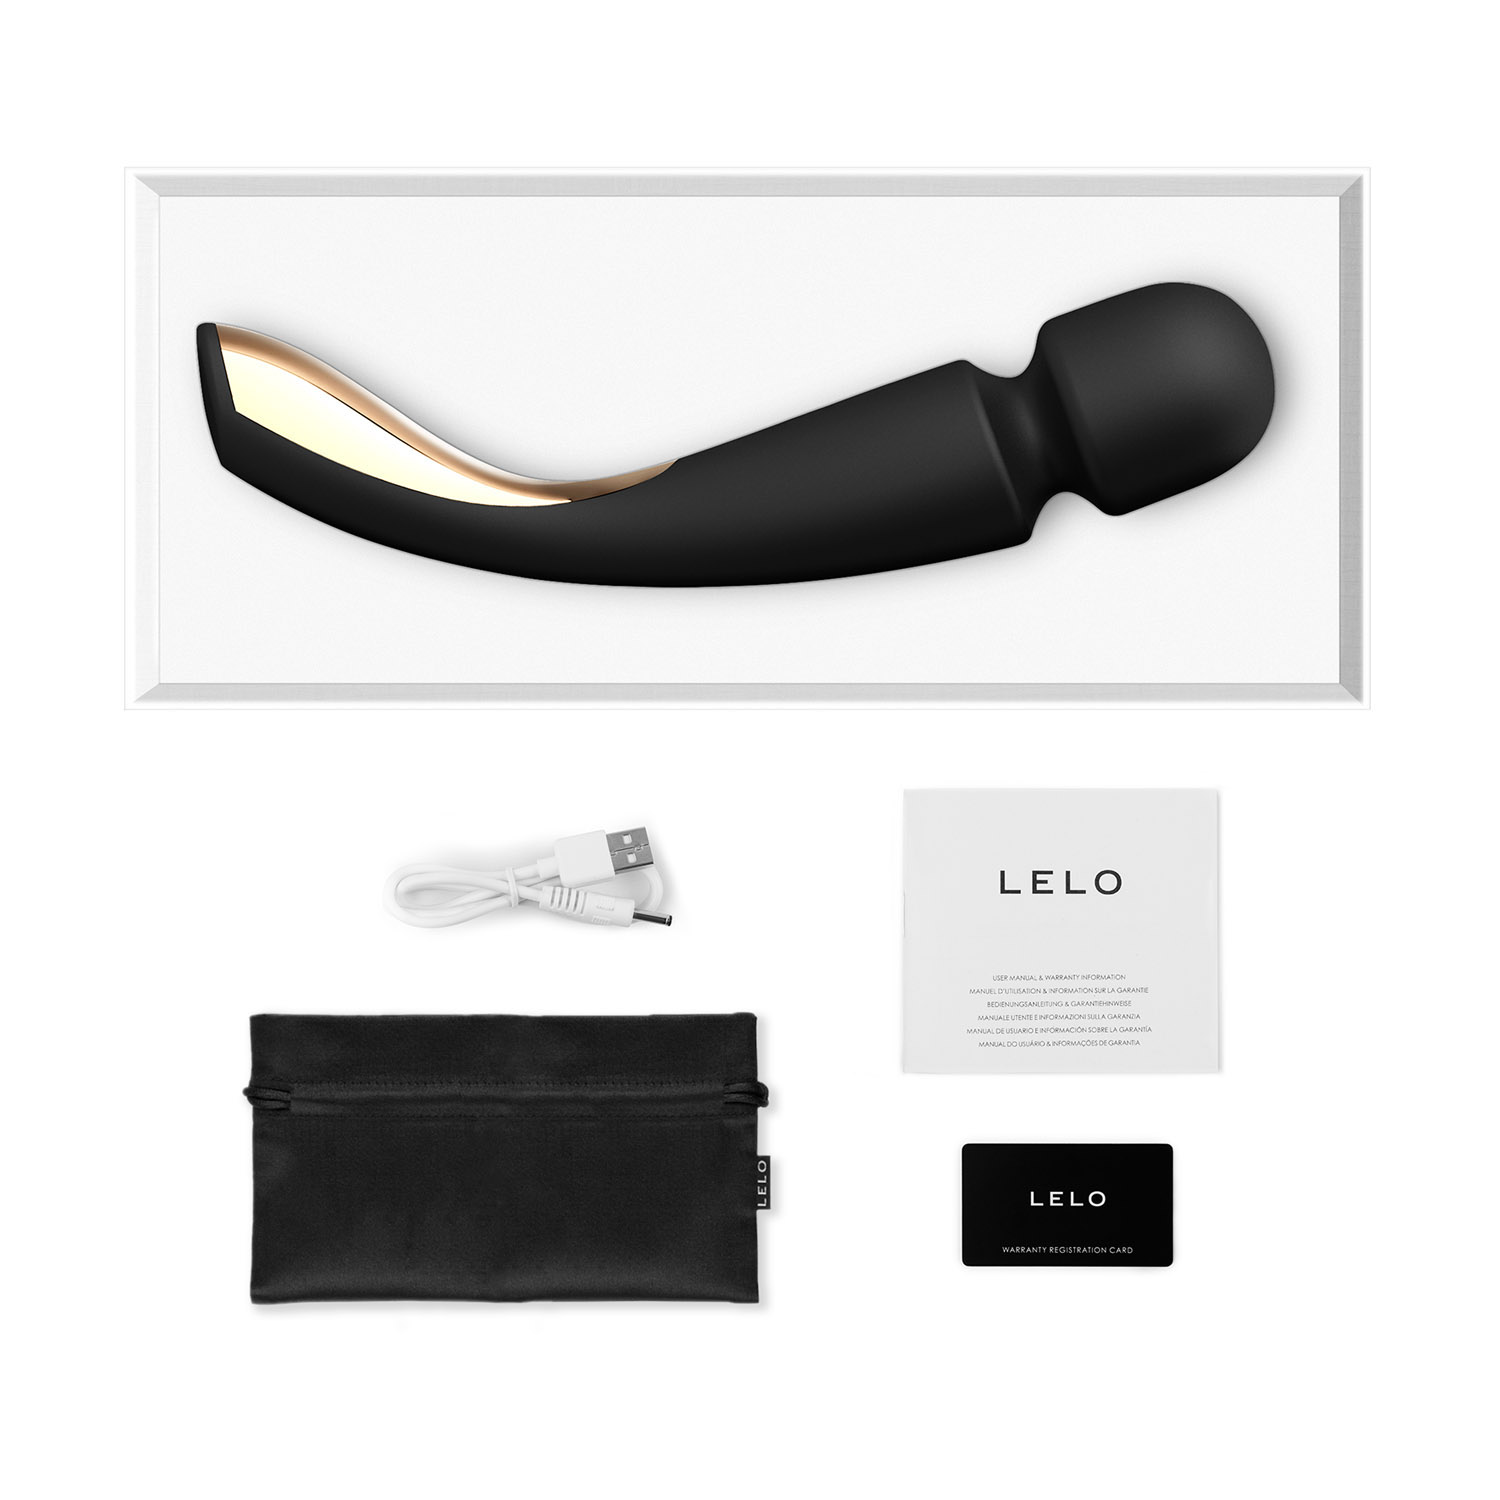 LELO SMART Wand 2 Large, Black, Luxurious Full-Body Waterproof Massager With 10 Vibration Settings - image 3 of 4